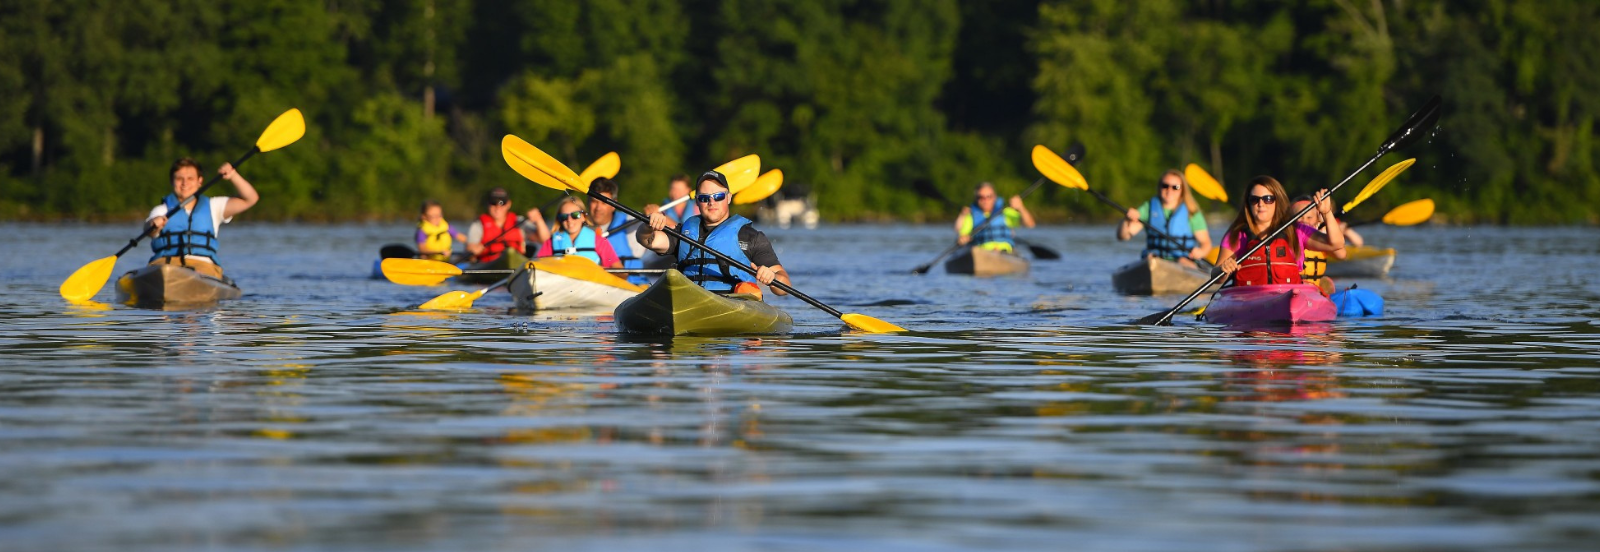 Kayakers on Atwood Lake, Ohio.